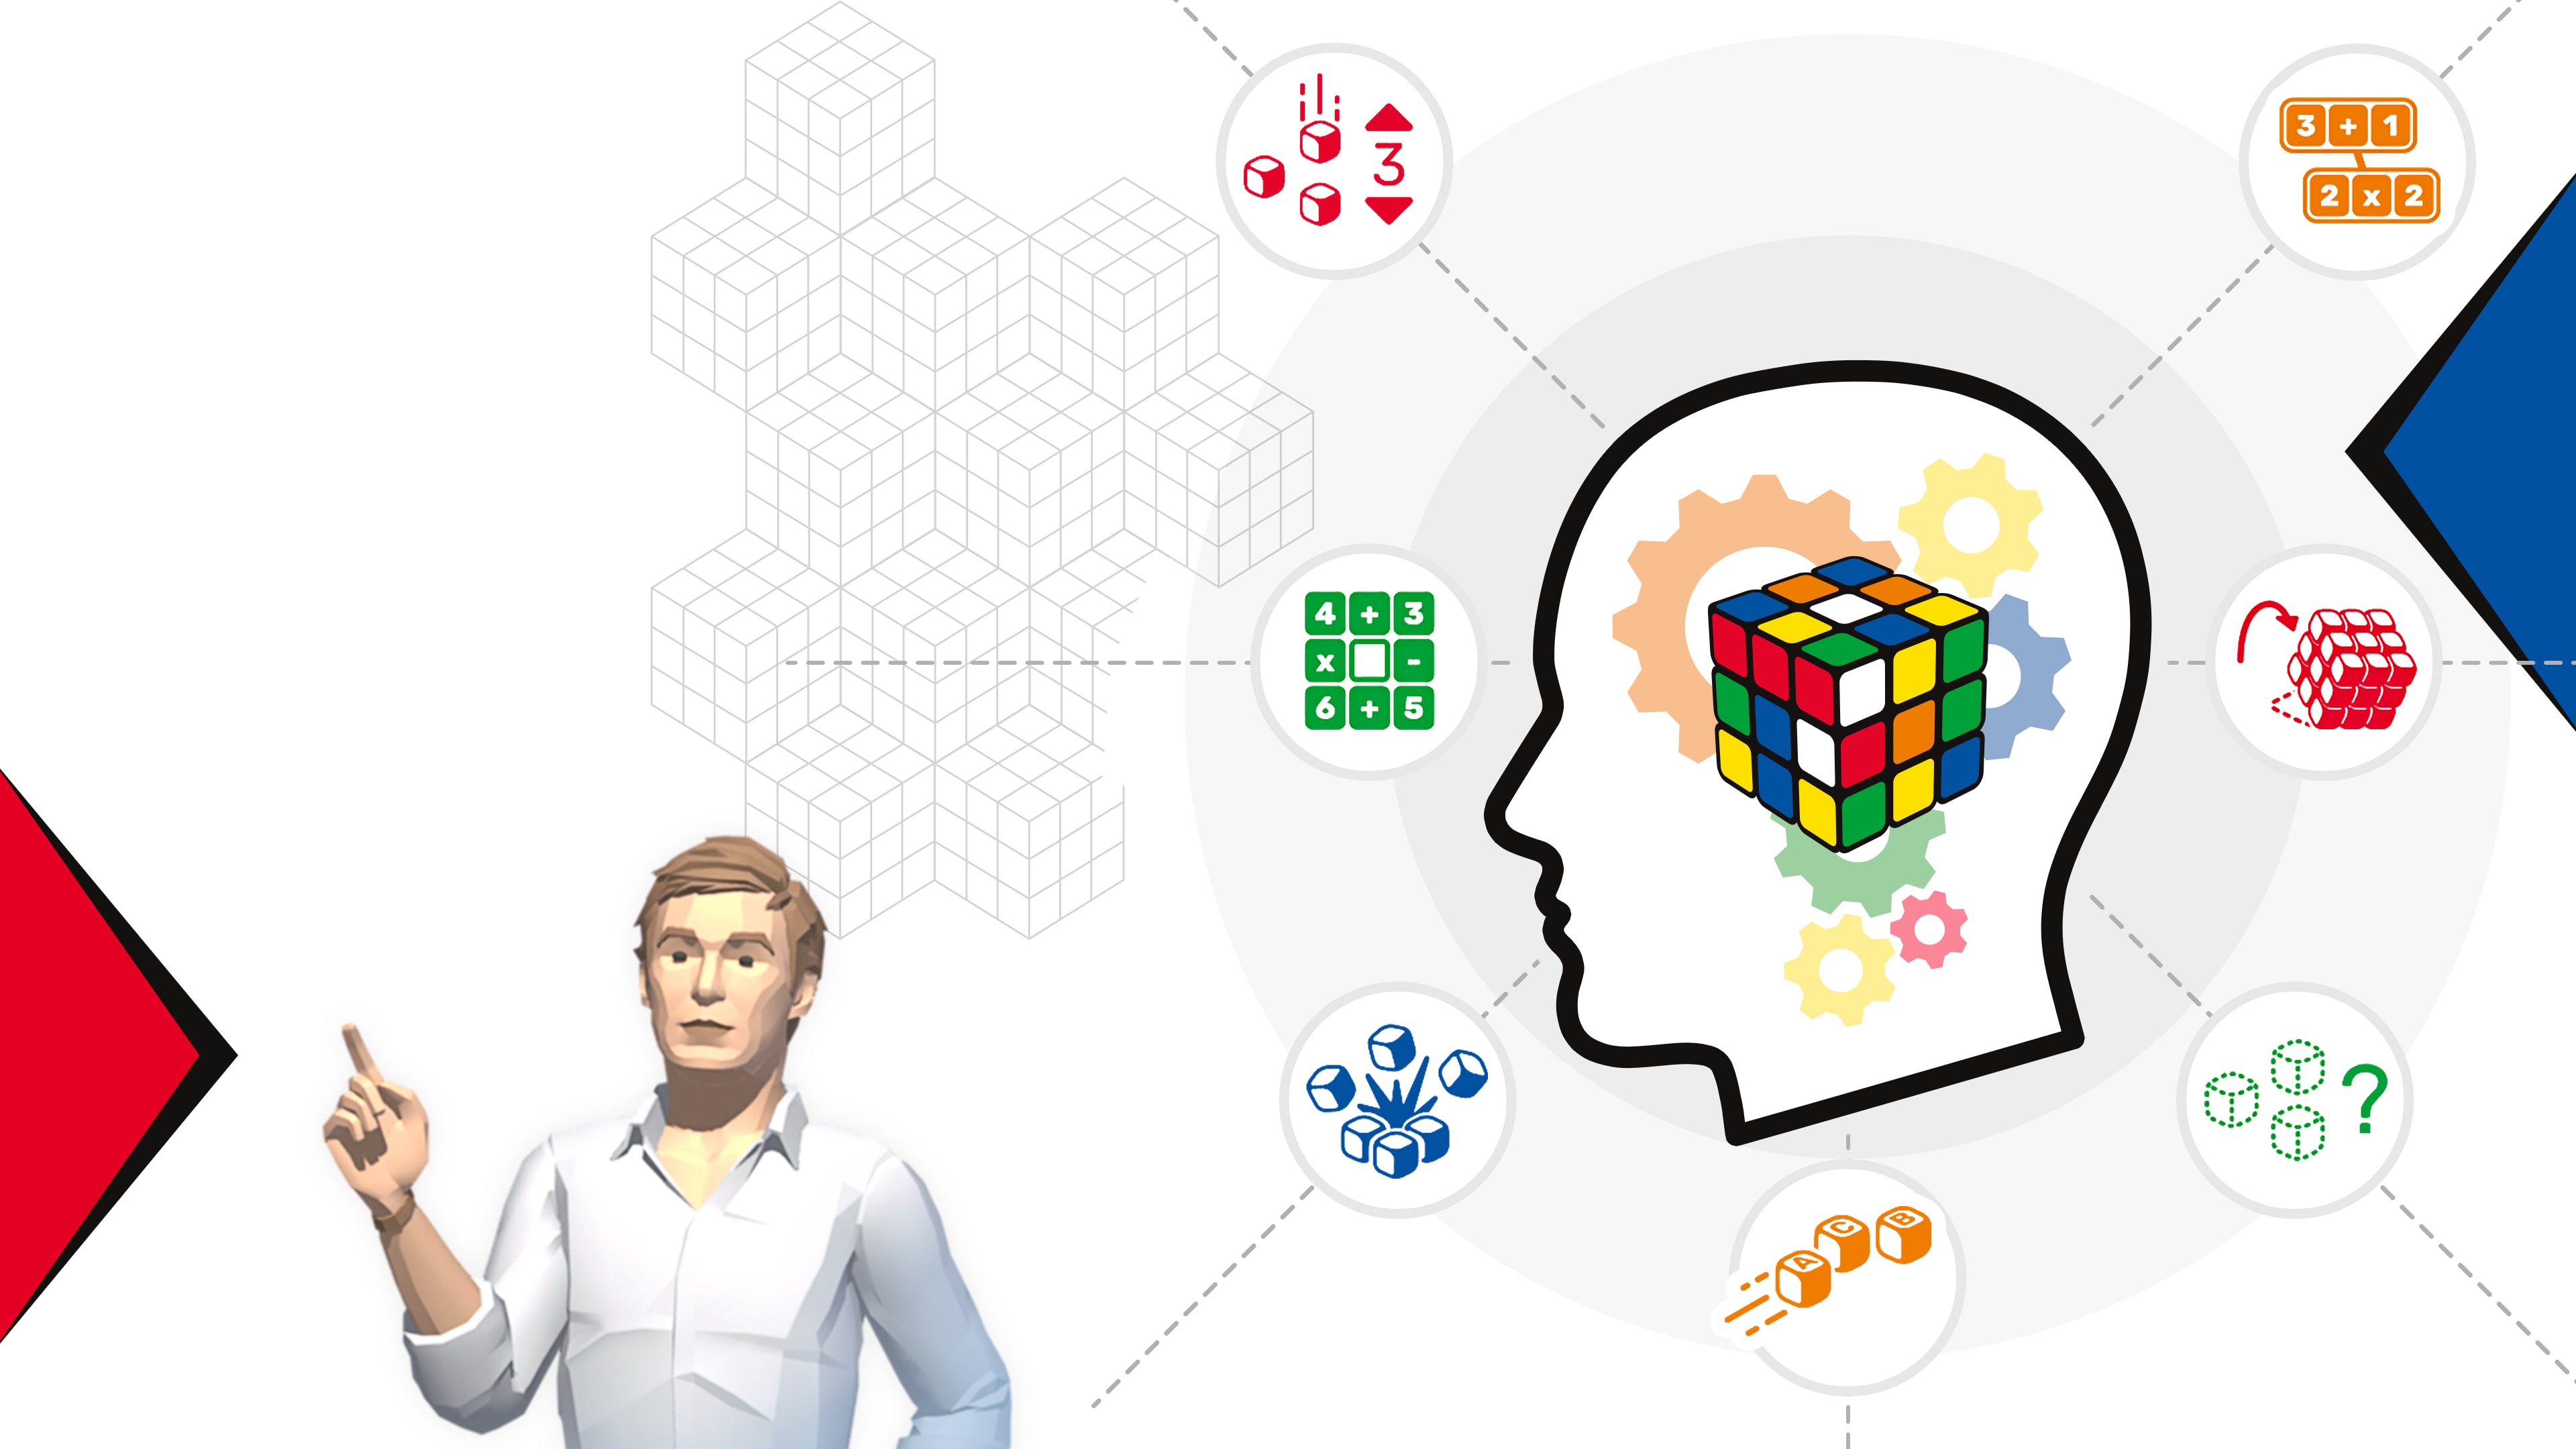 Brain Fitness del Profesor Rubik